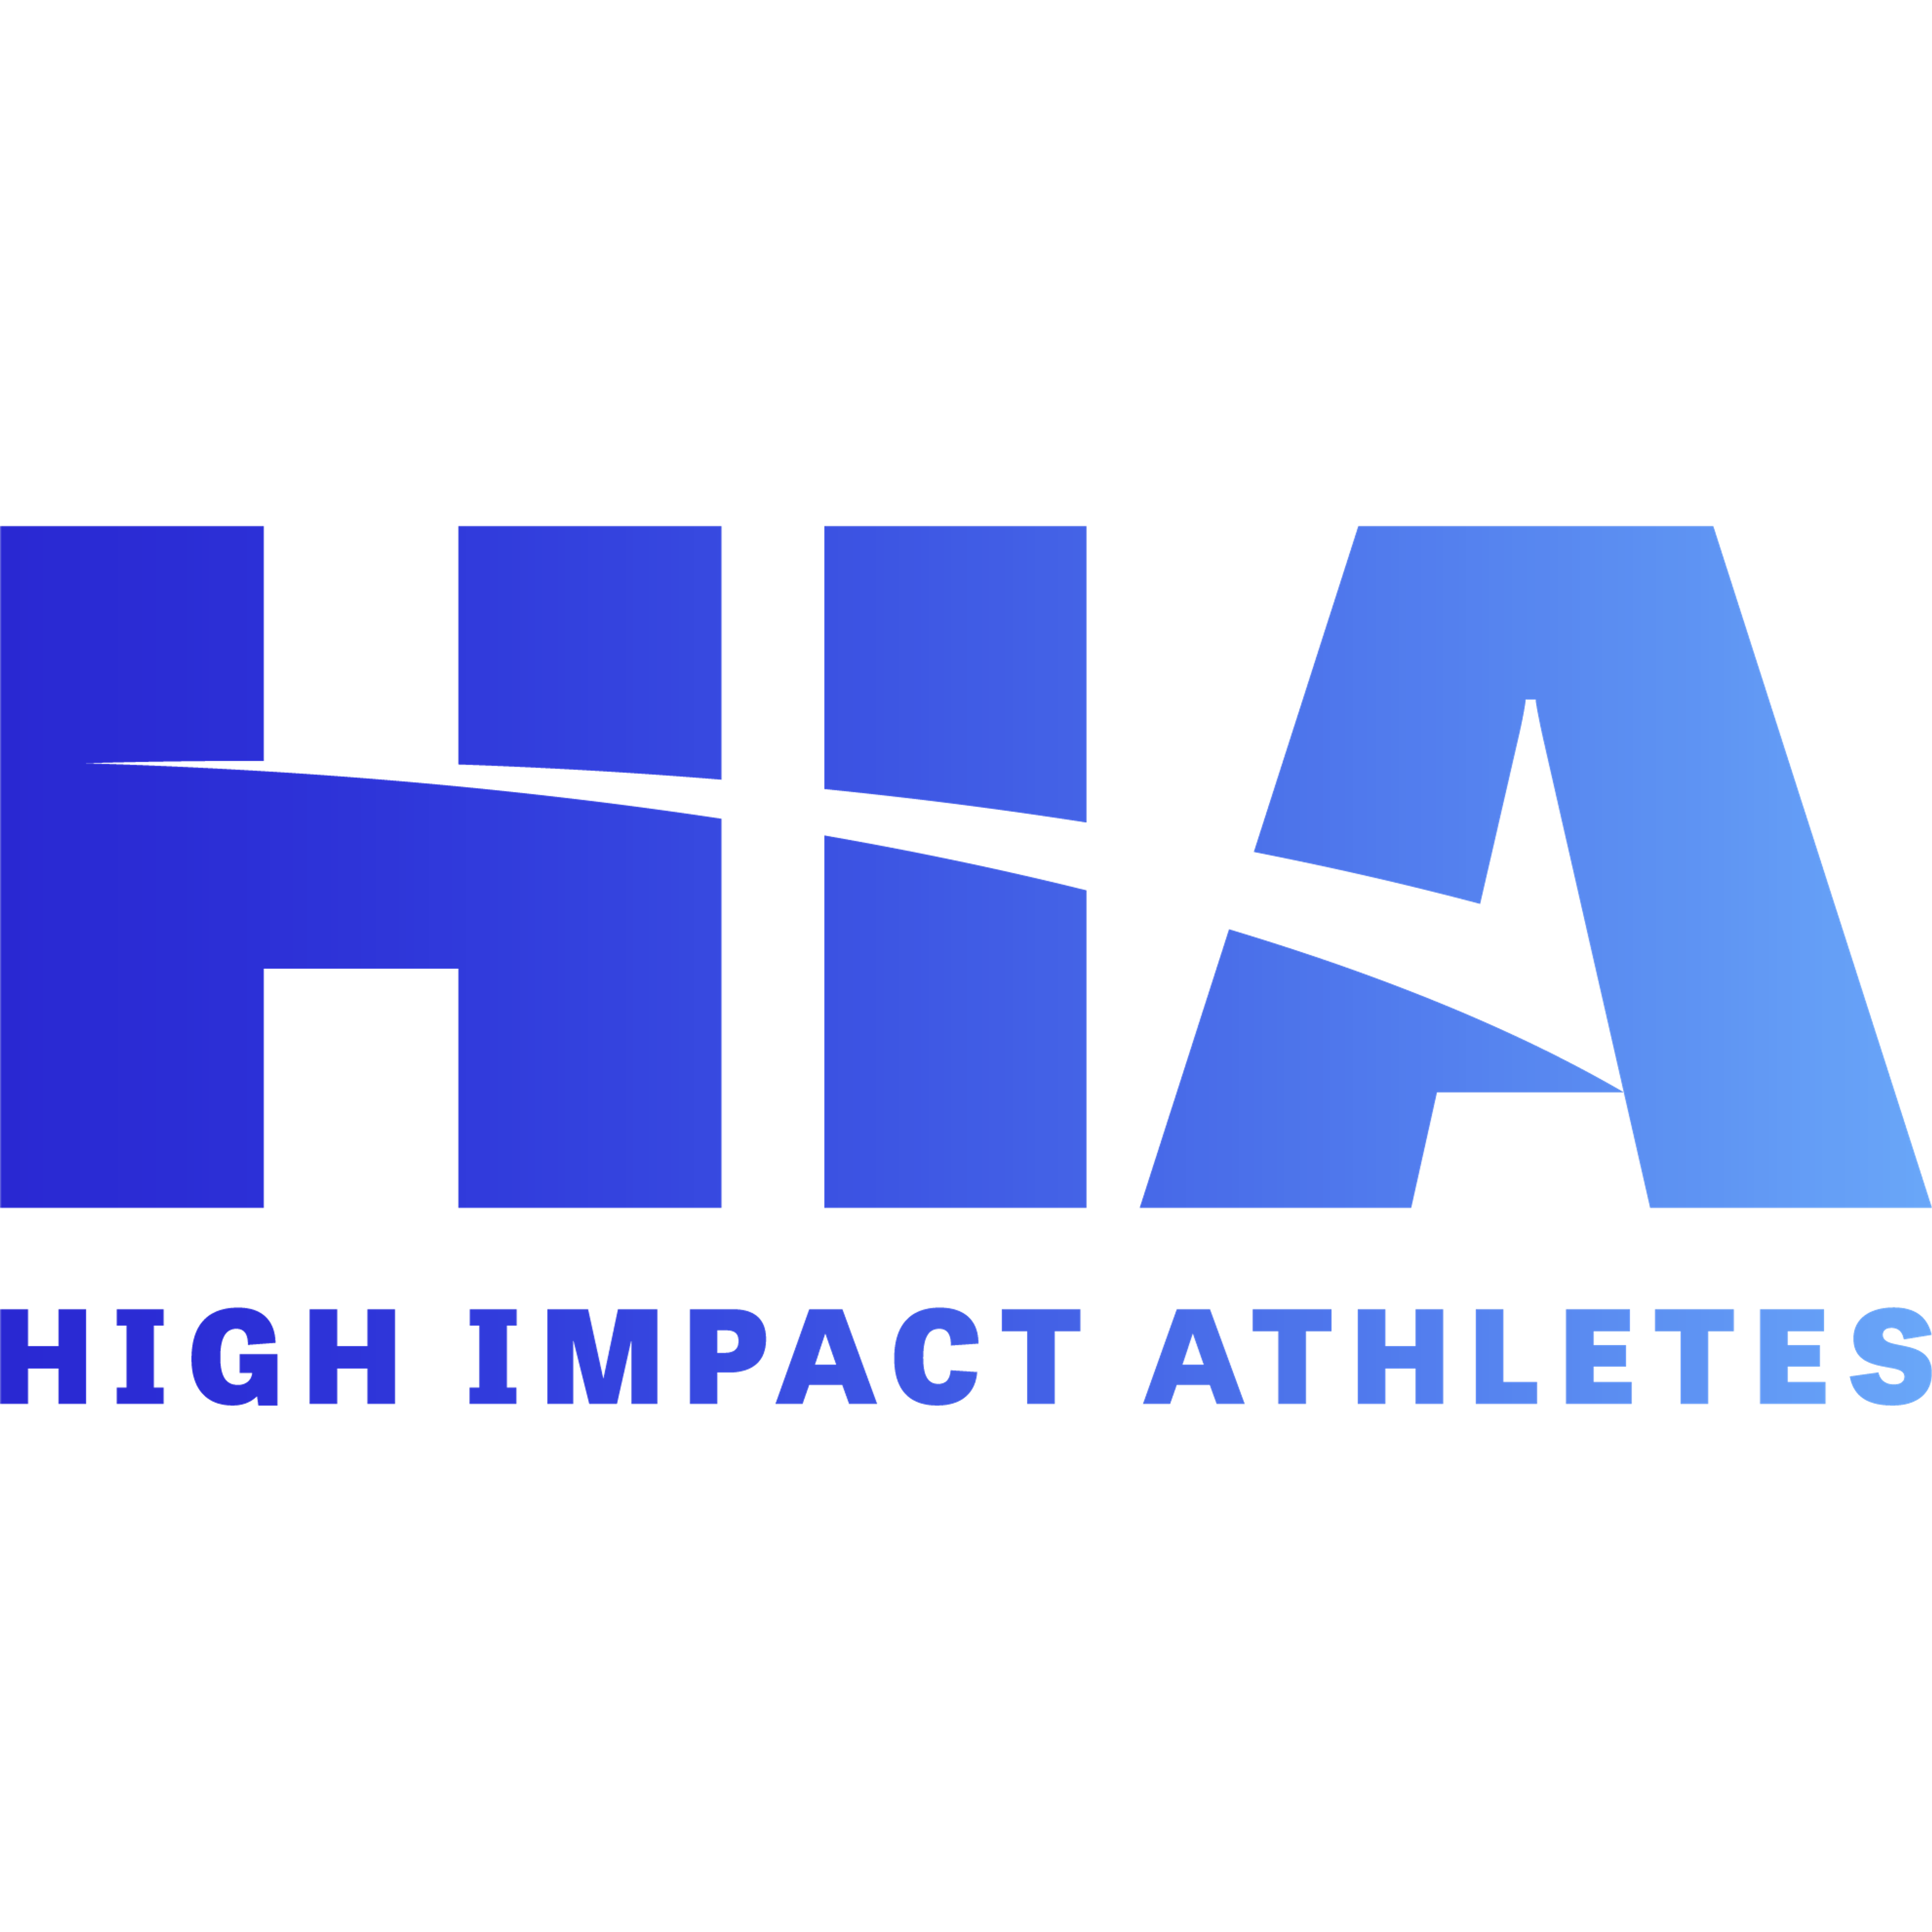 High Impact Athletes’ Animal Welfare Portfolio